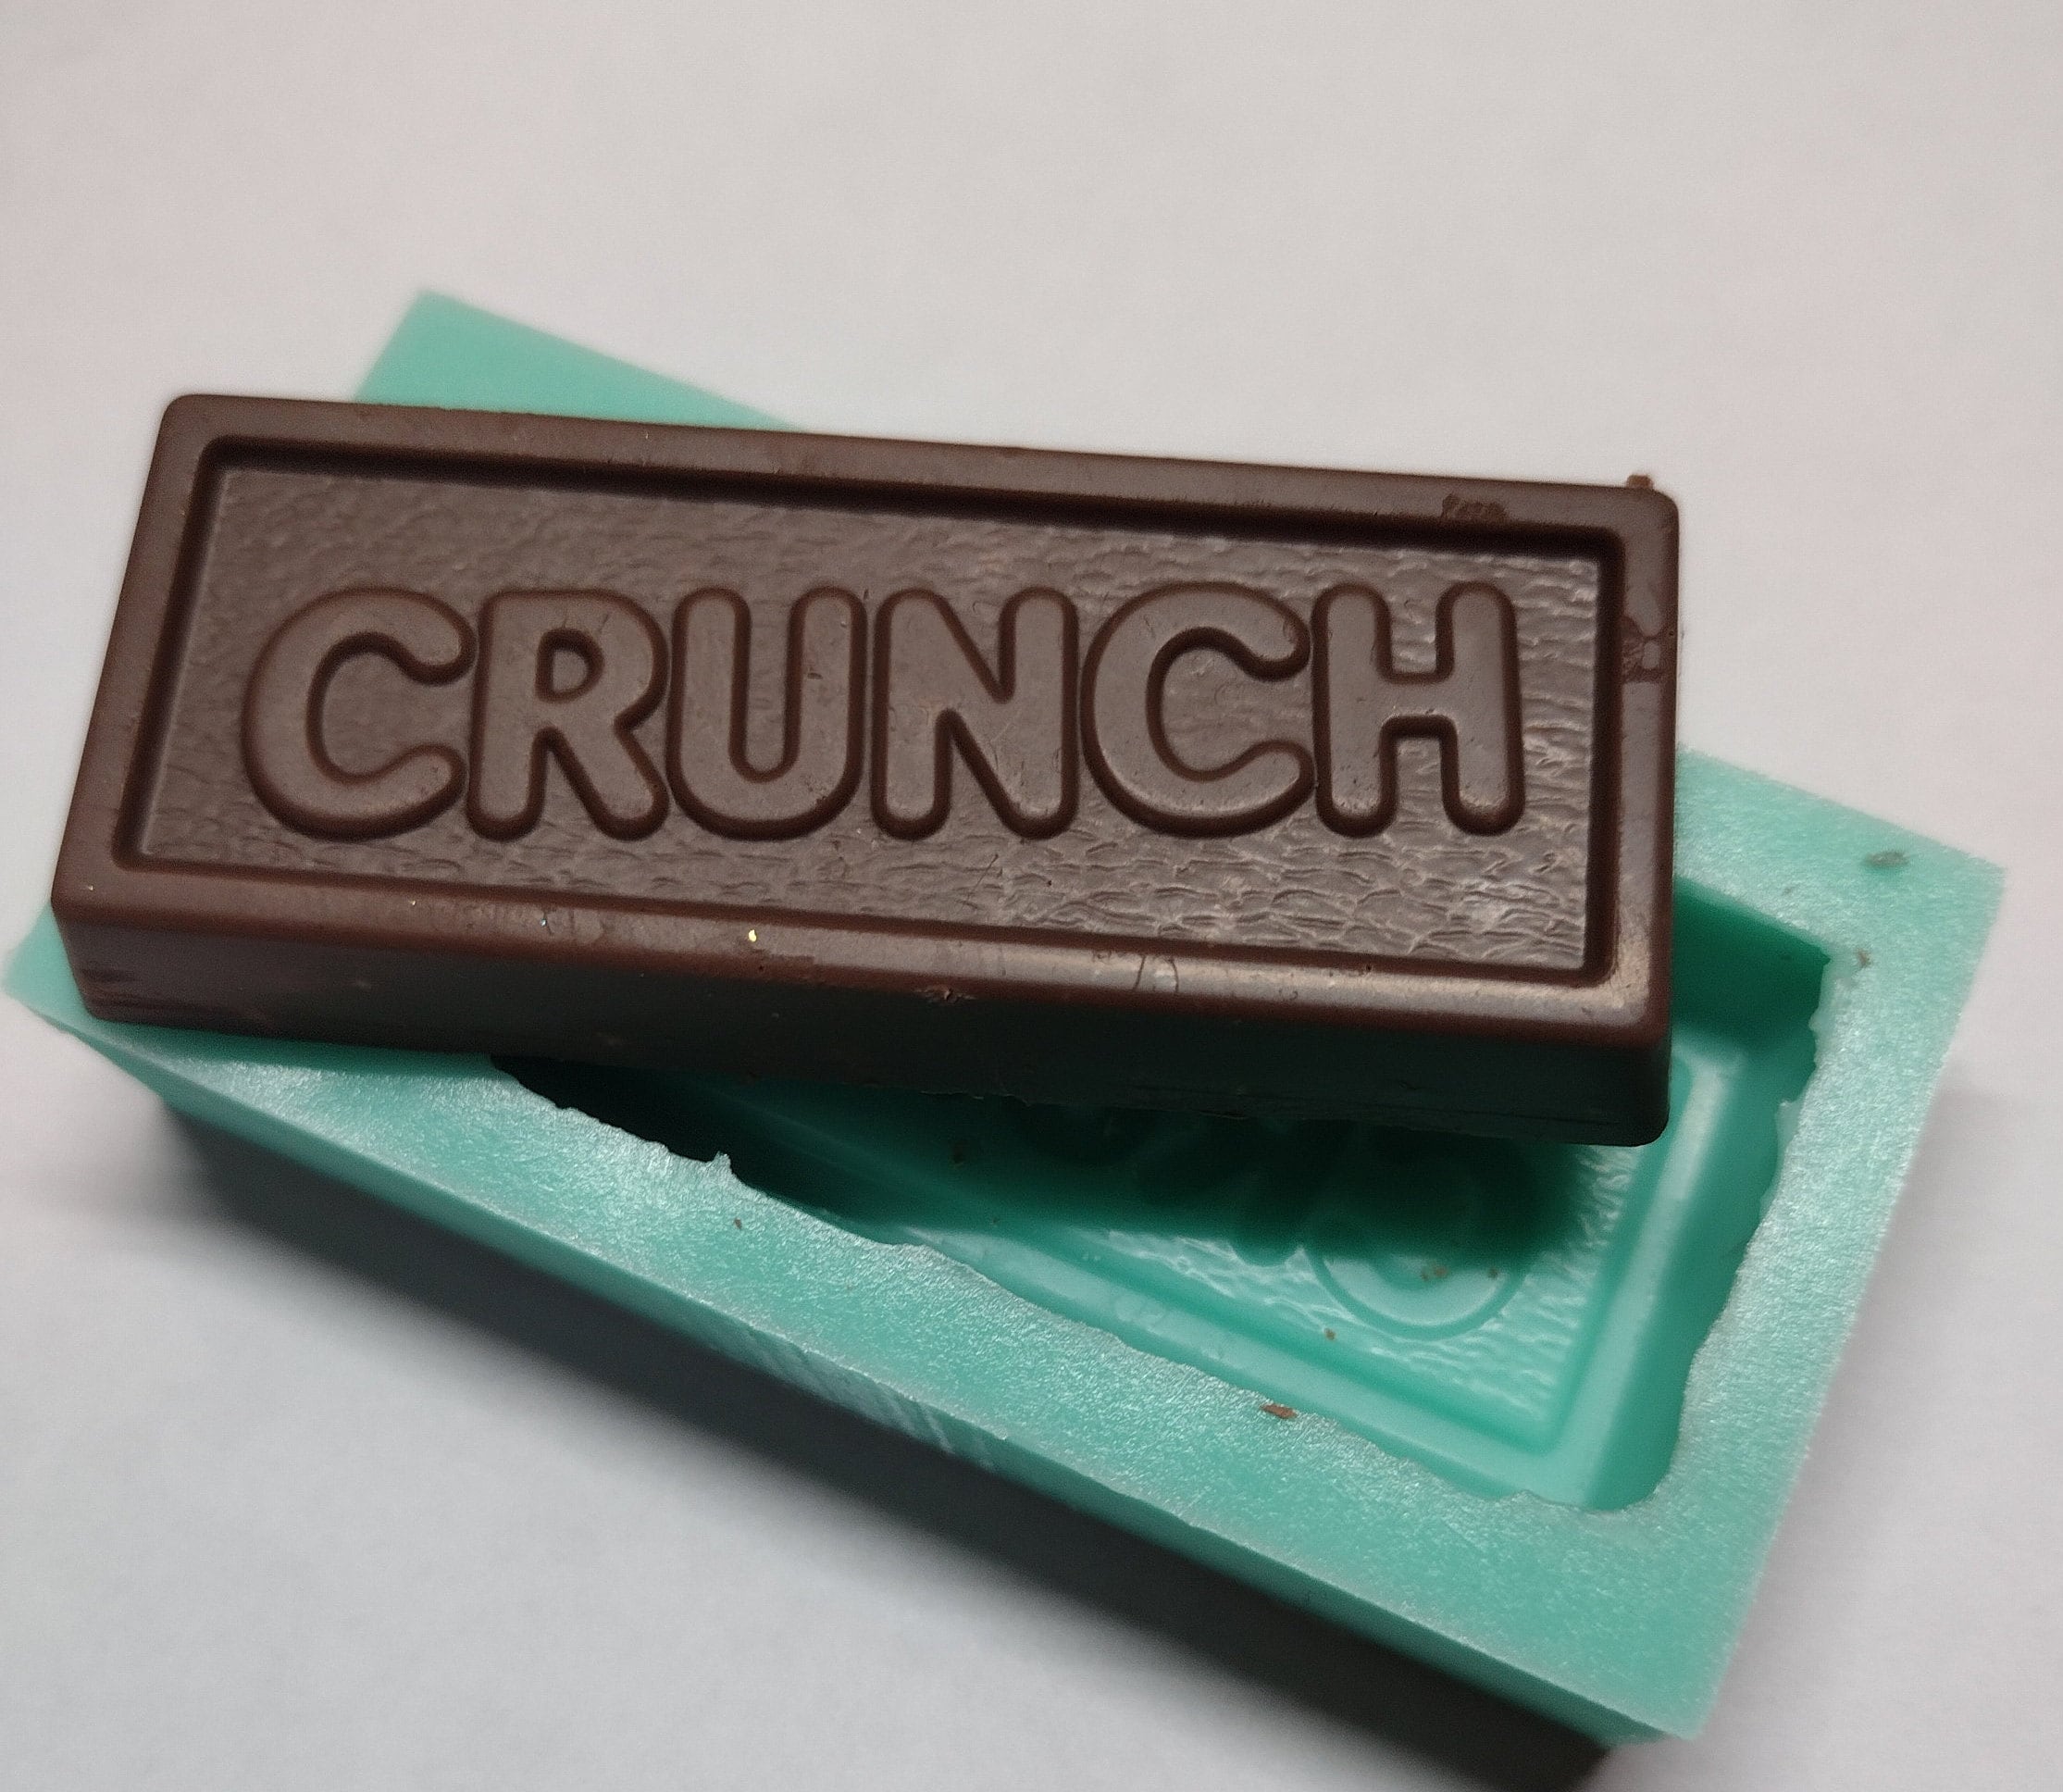 Customize chocolate mold - Giant chocolate bar 7 oz - personalized